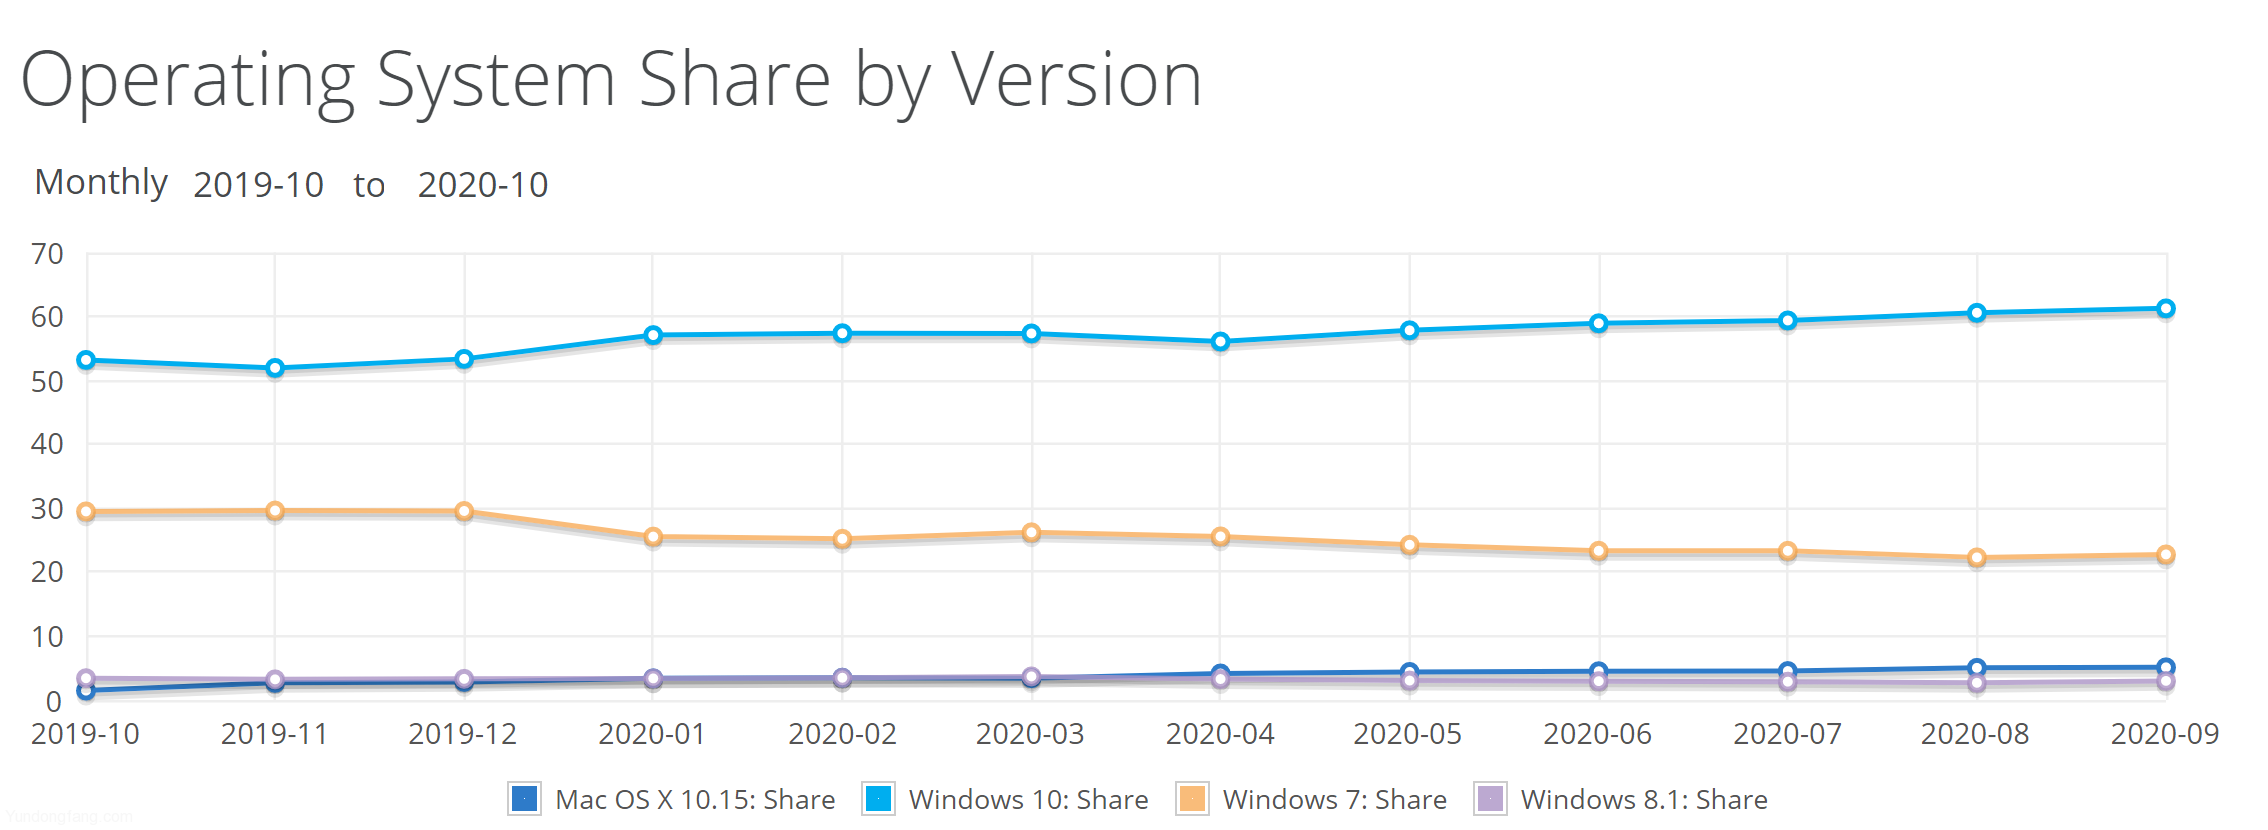 Windows 10和Microsoft Edge的市场份额均显着增长，Edge达到两位数